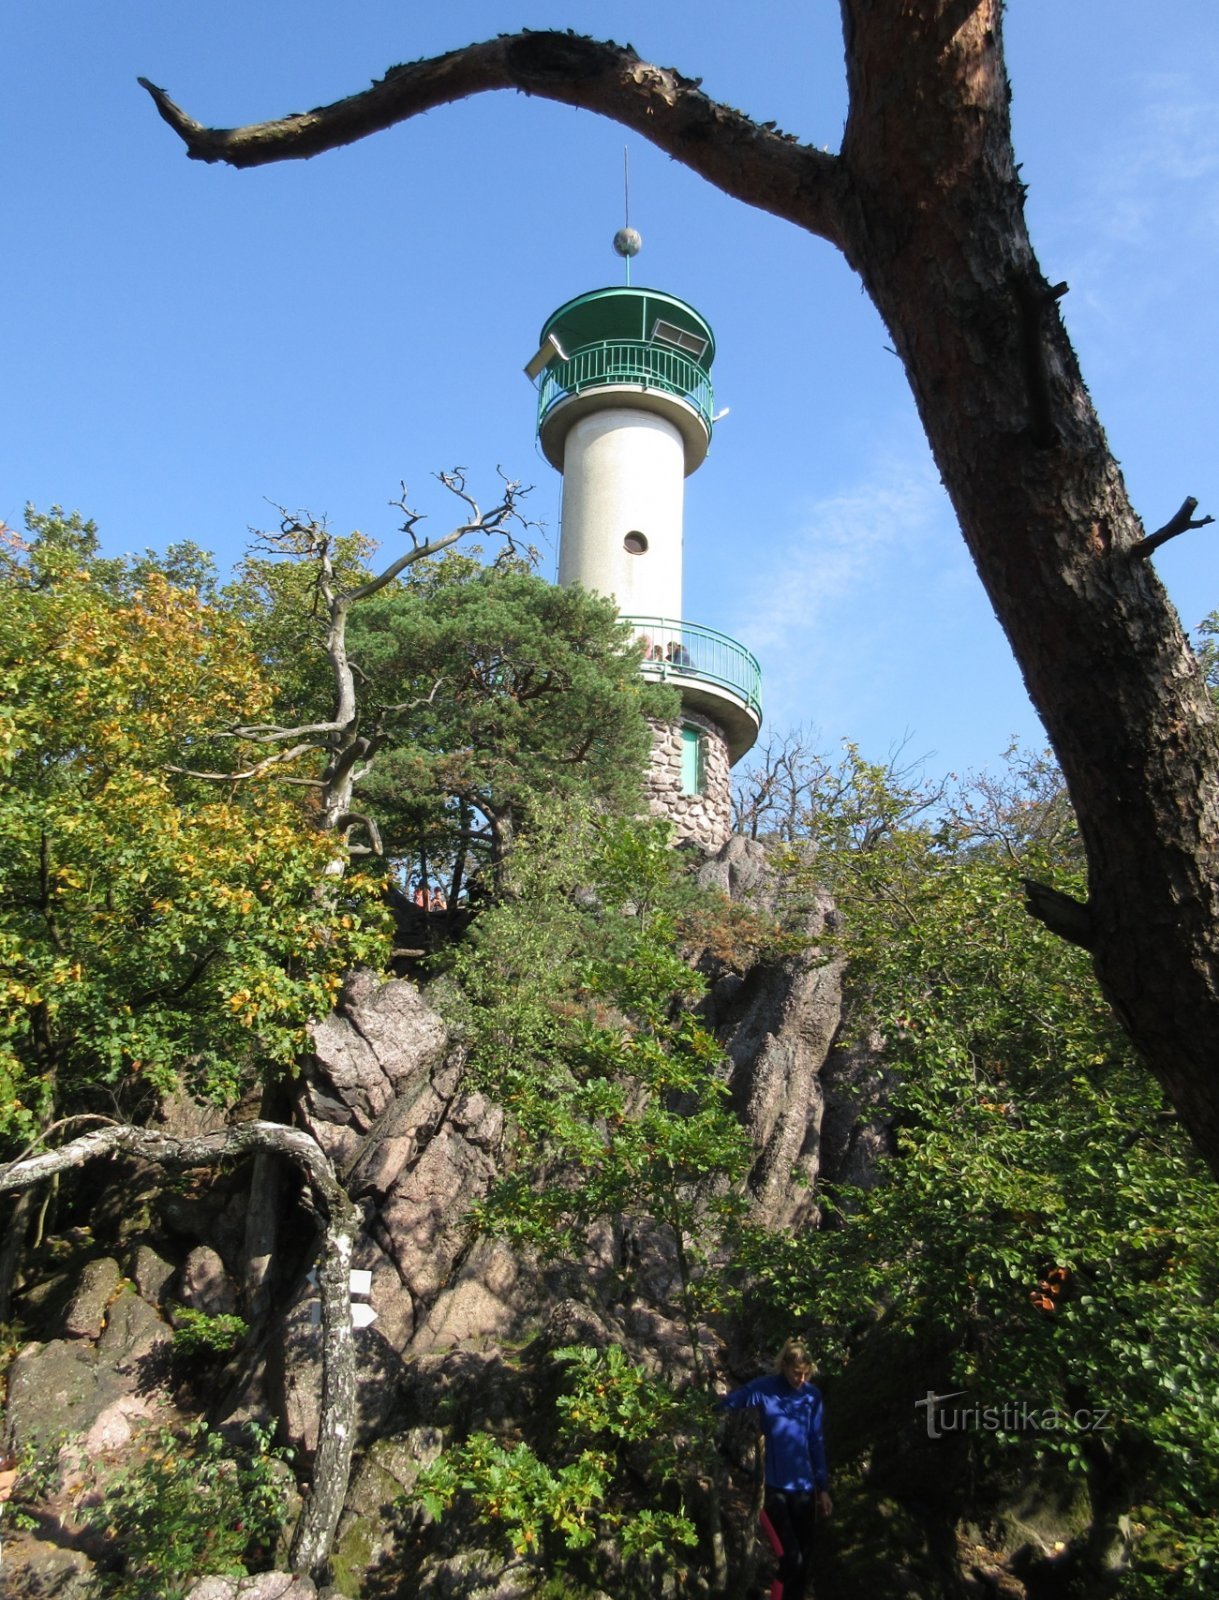 Lelekovice - tháp quan sát Babí lom